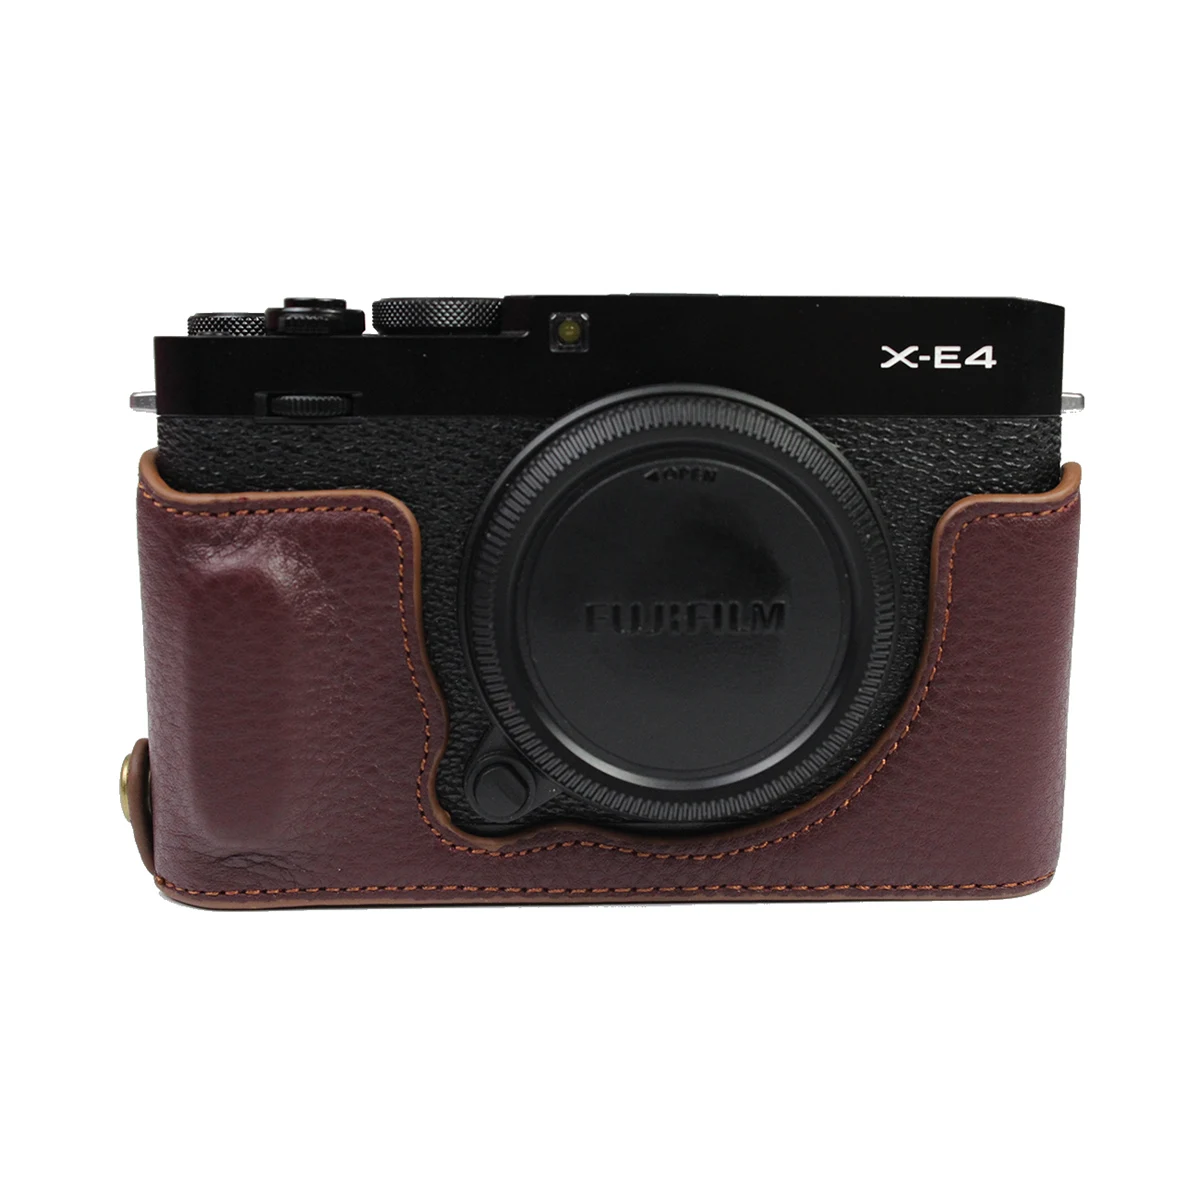 Leder Tasche Kamera Griff Schutzhülle Cover Protection für FUJIFILM X-E4 Kameras